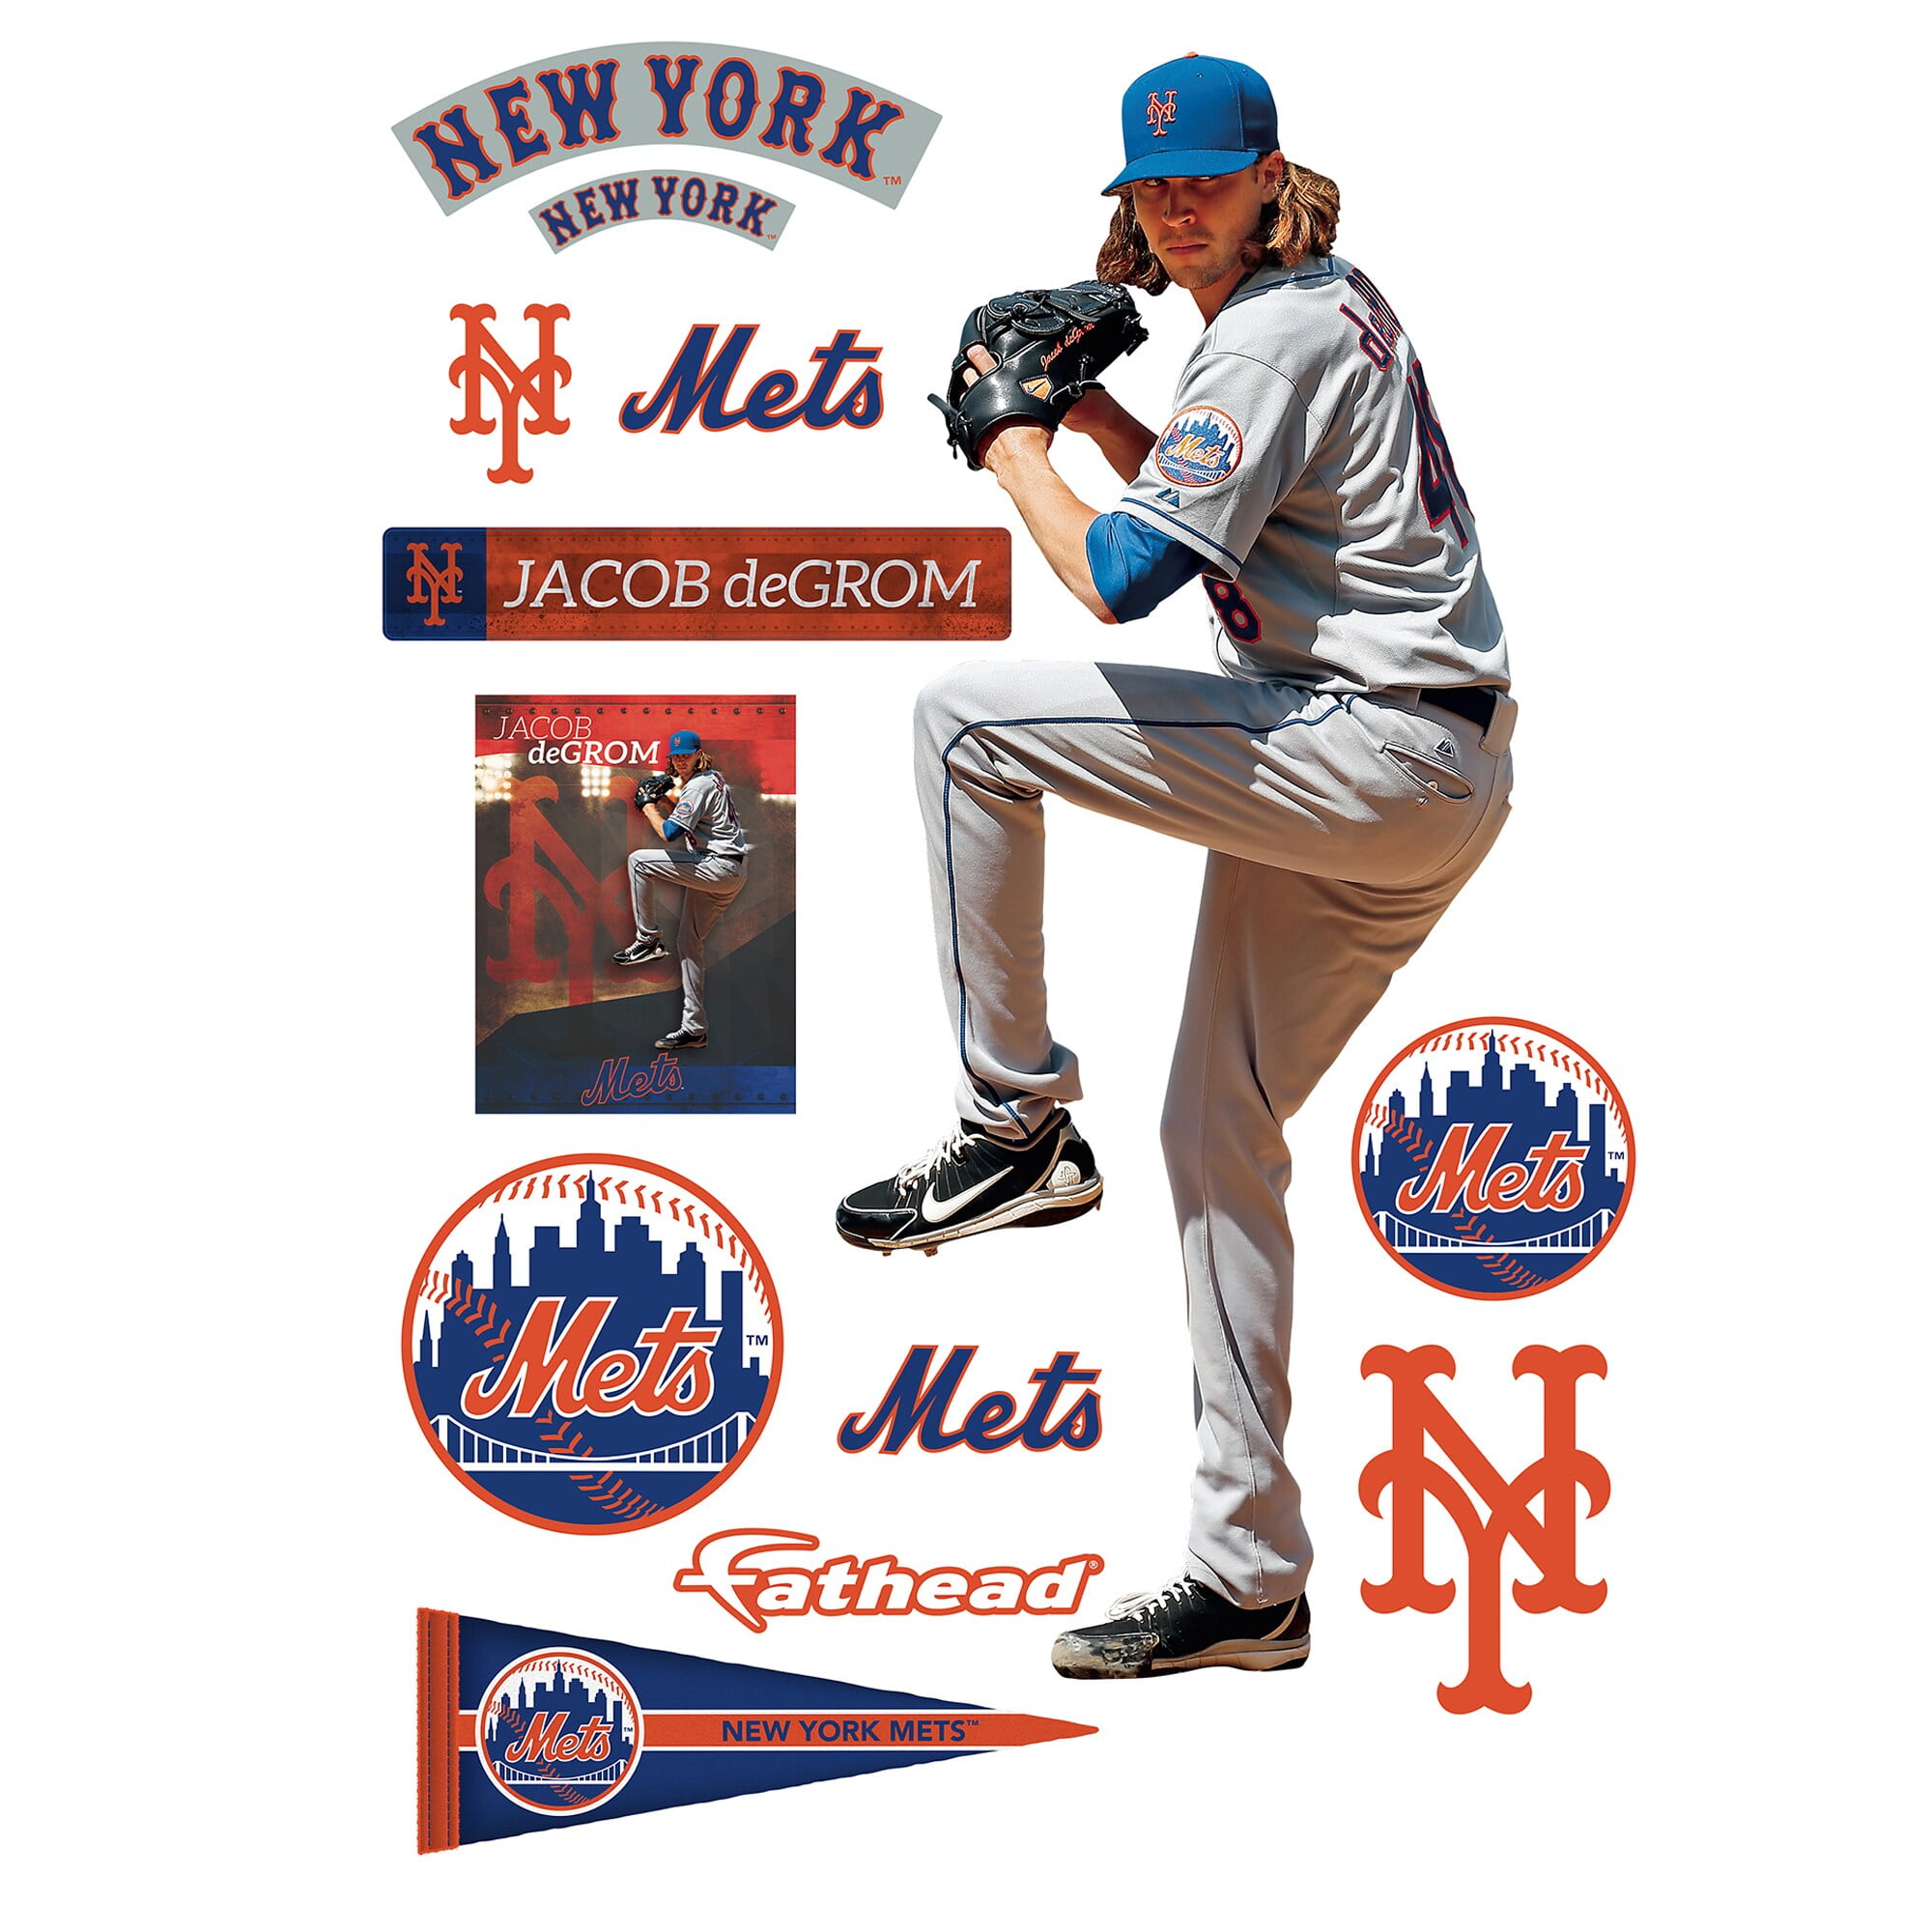 New York Mets Emblem Sticker Raised 3D Metal Auto Emblem 